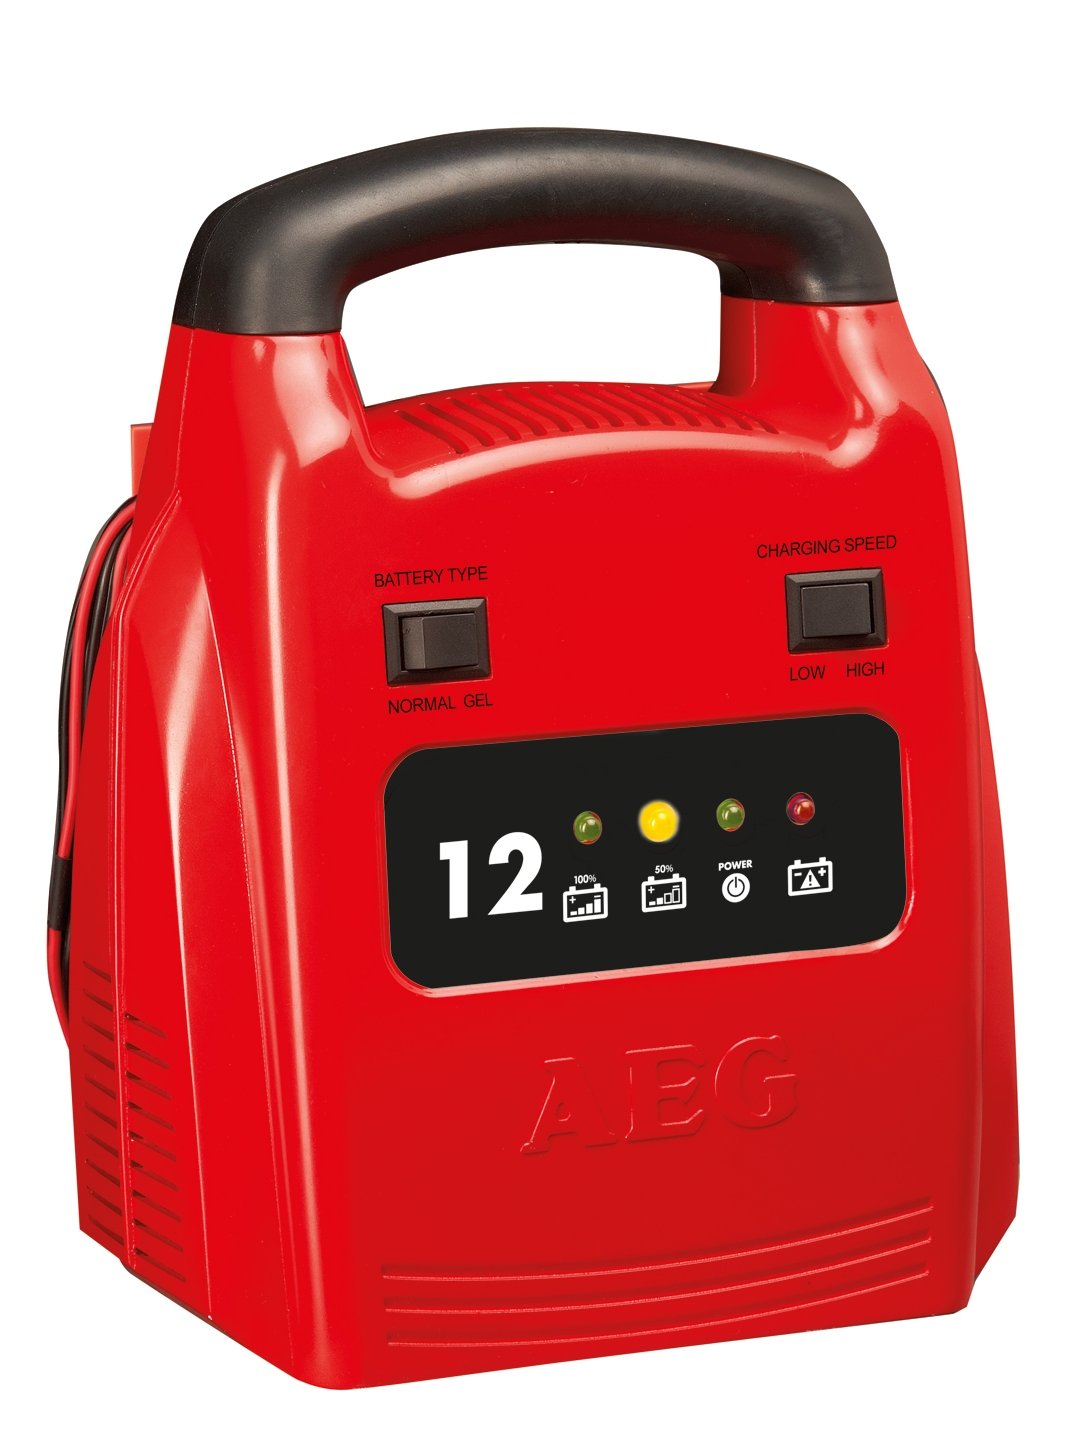 AEG 97005 Automatik-Ladegerät AG 1212, 12 Ampere für 12 V Batterien, CE, IP 20 von AEG